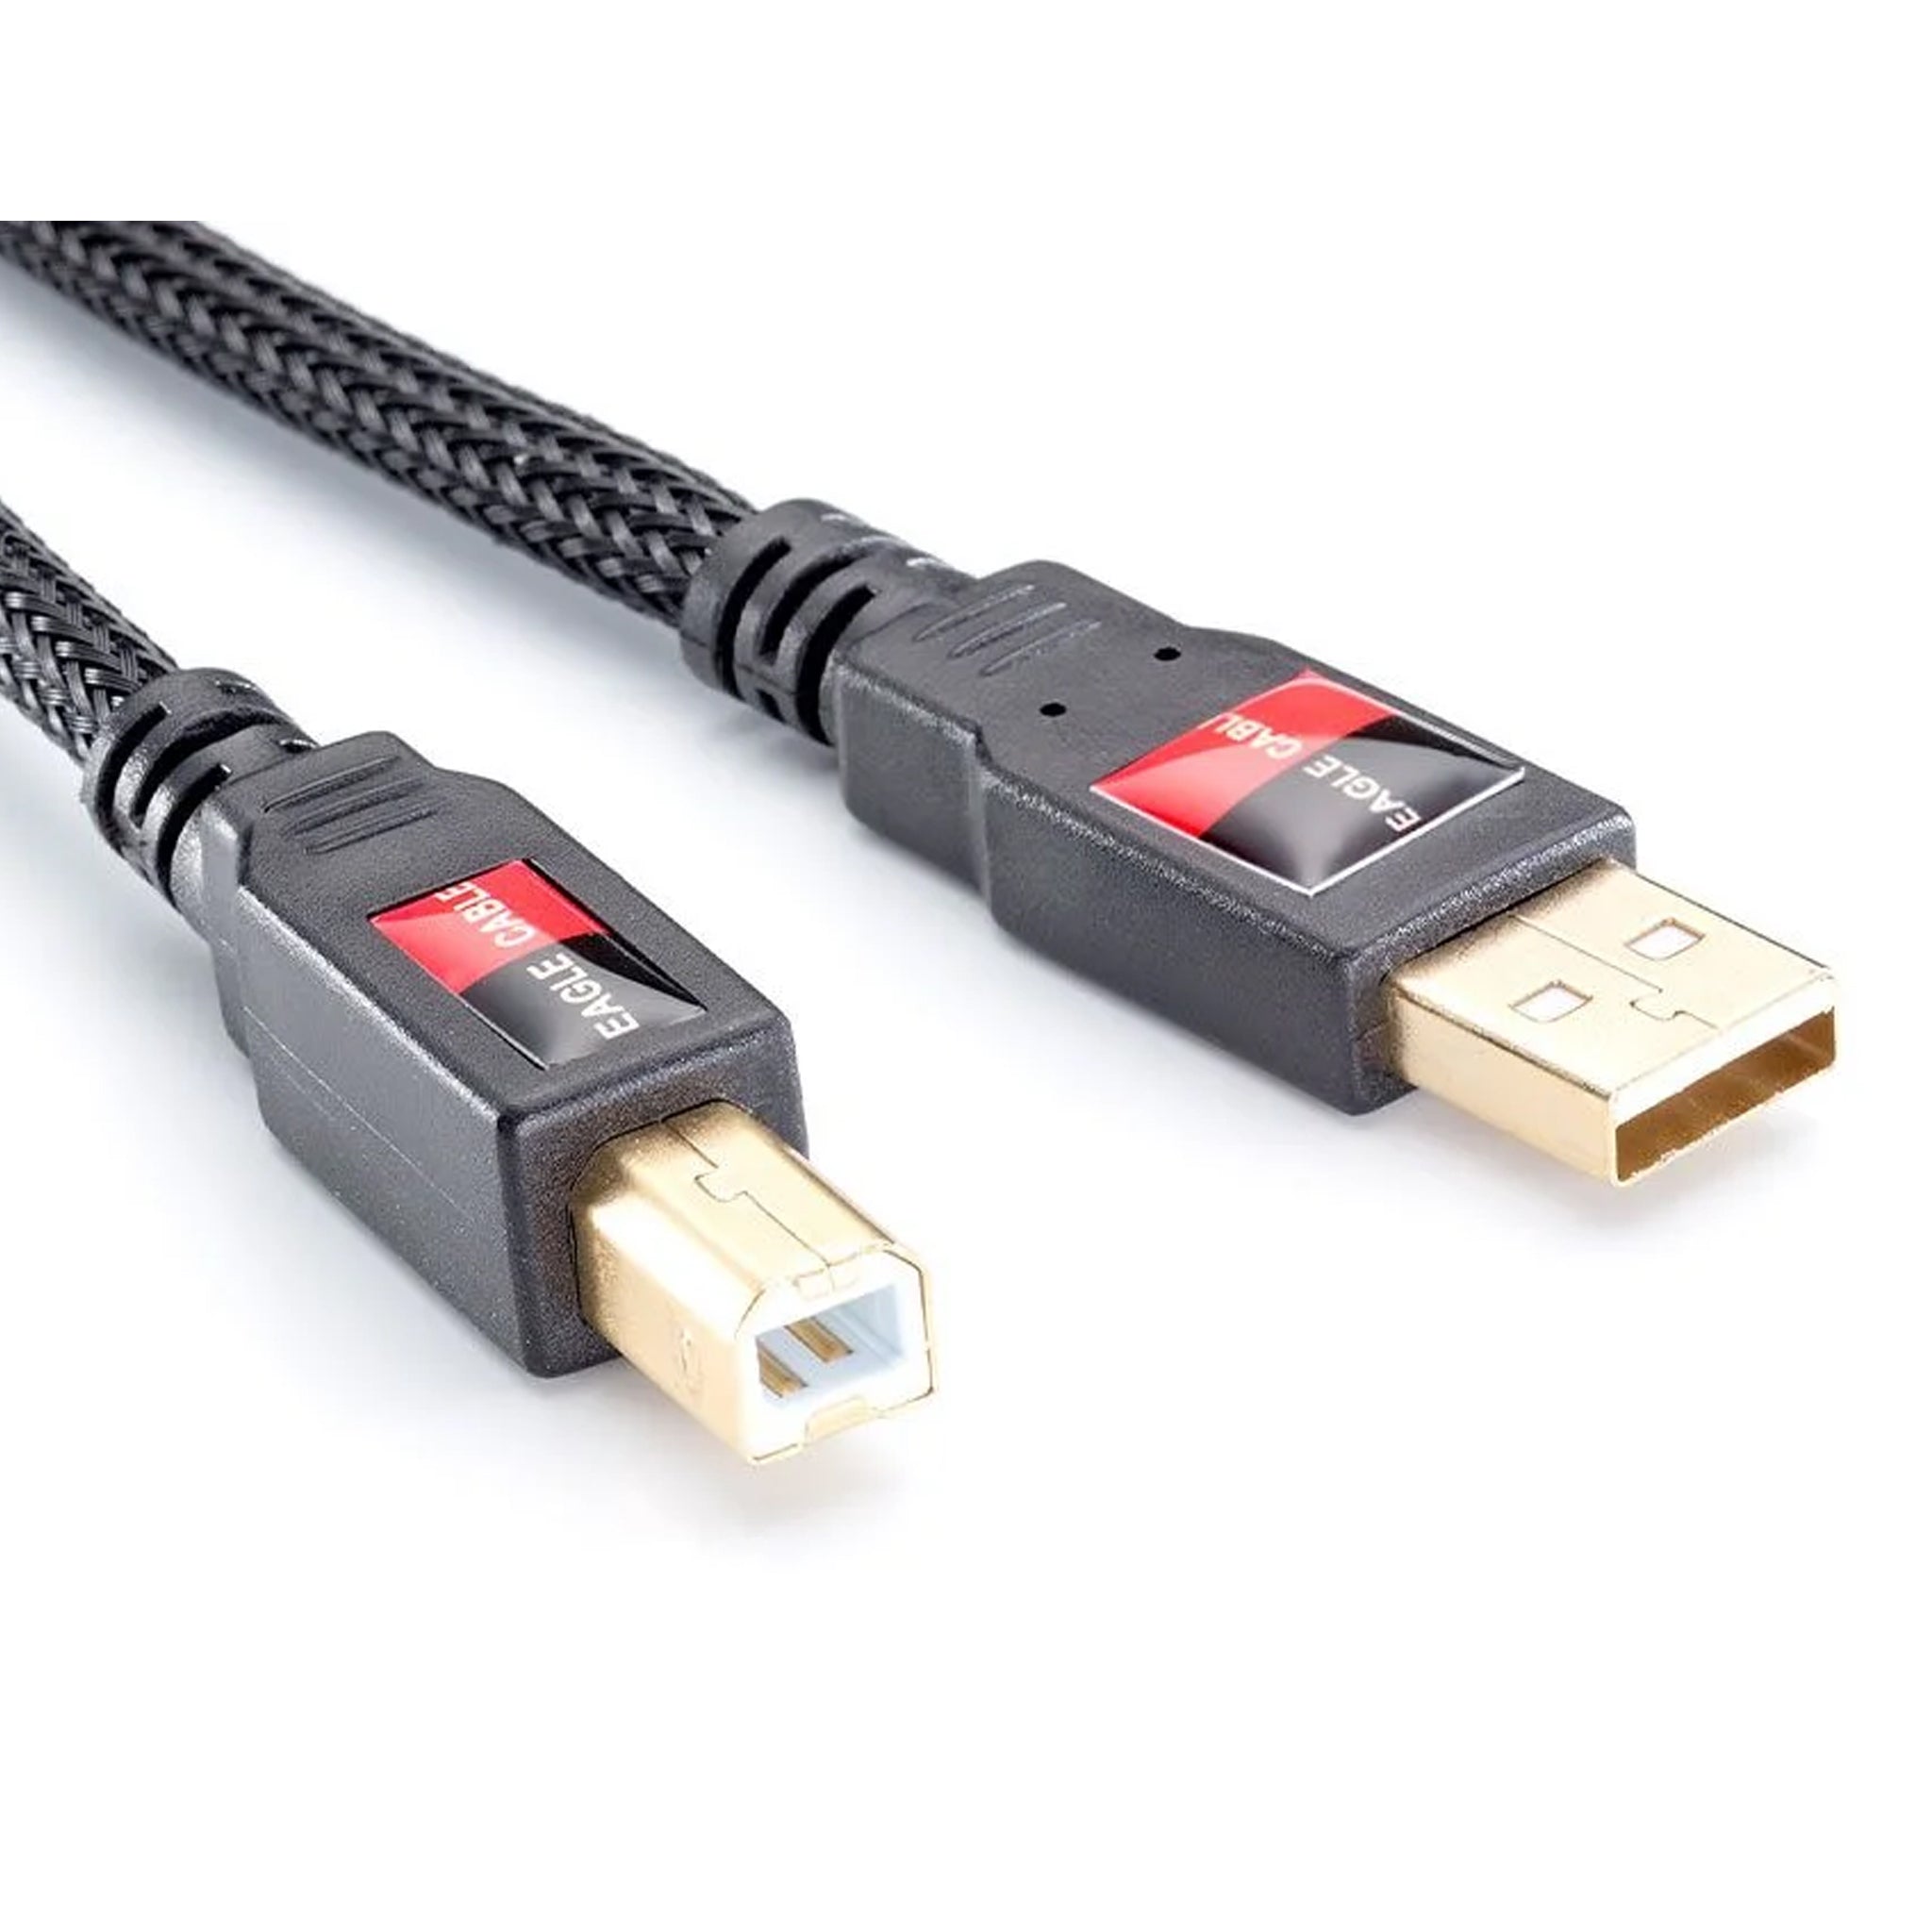 EAGLE-CABLE HDMI 4K DELUXE - CF AUDIO Tienda On-Line